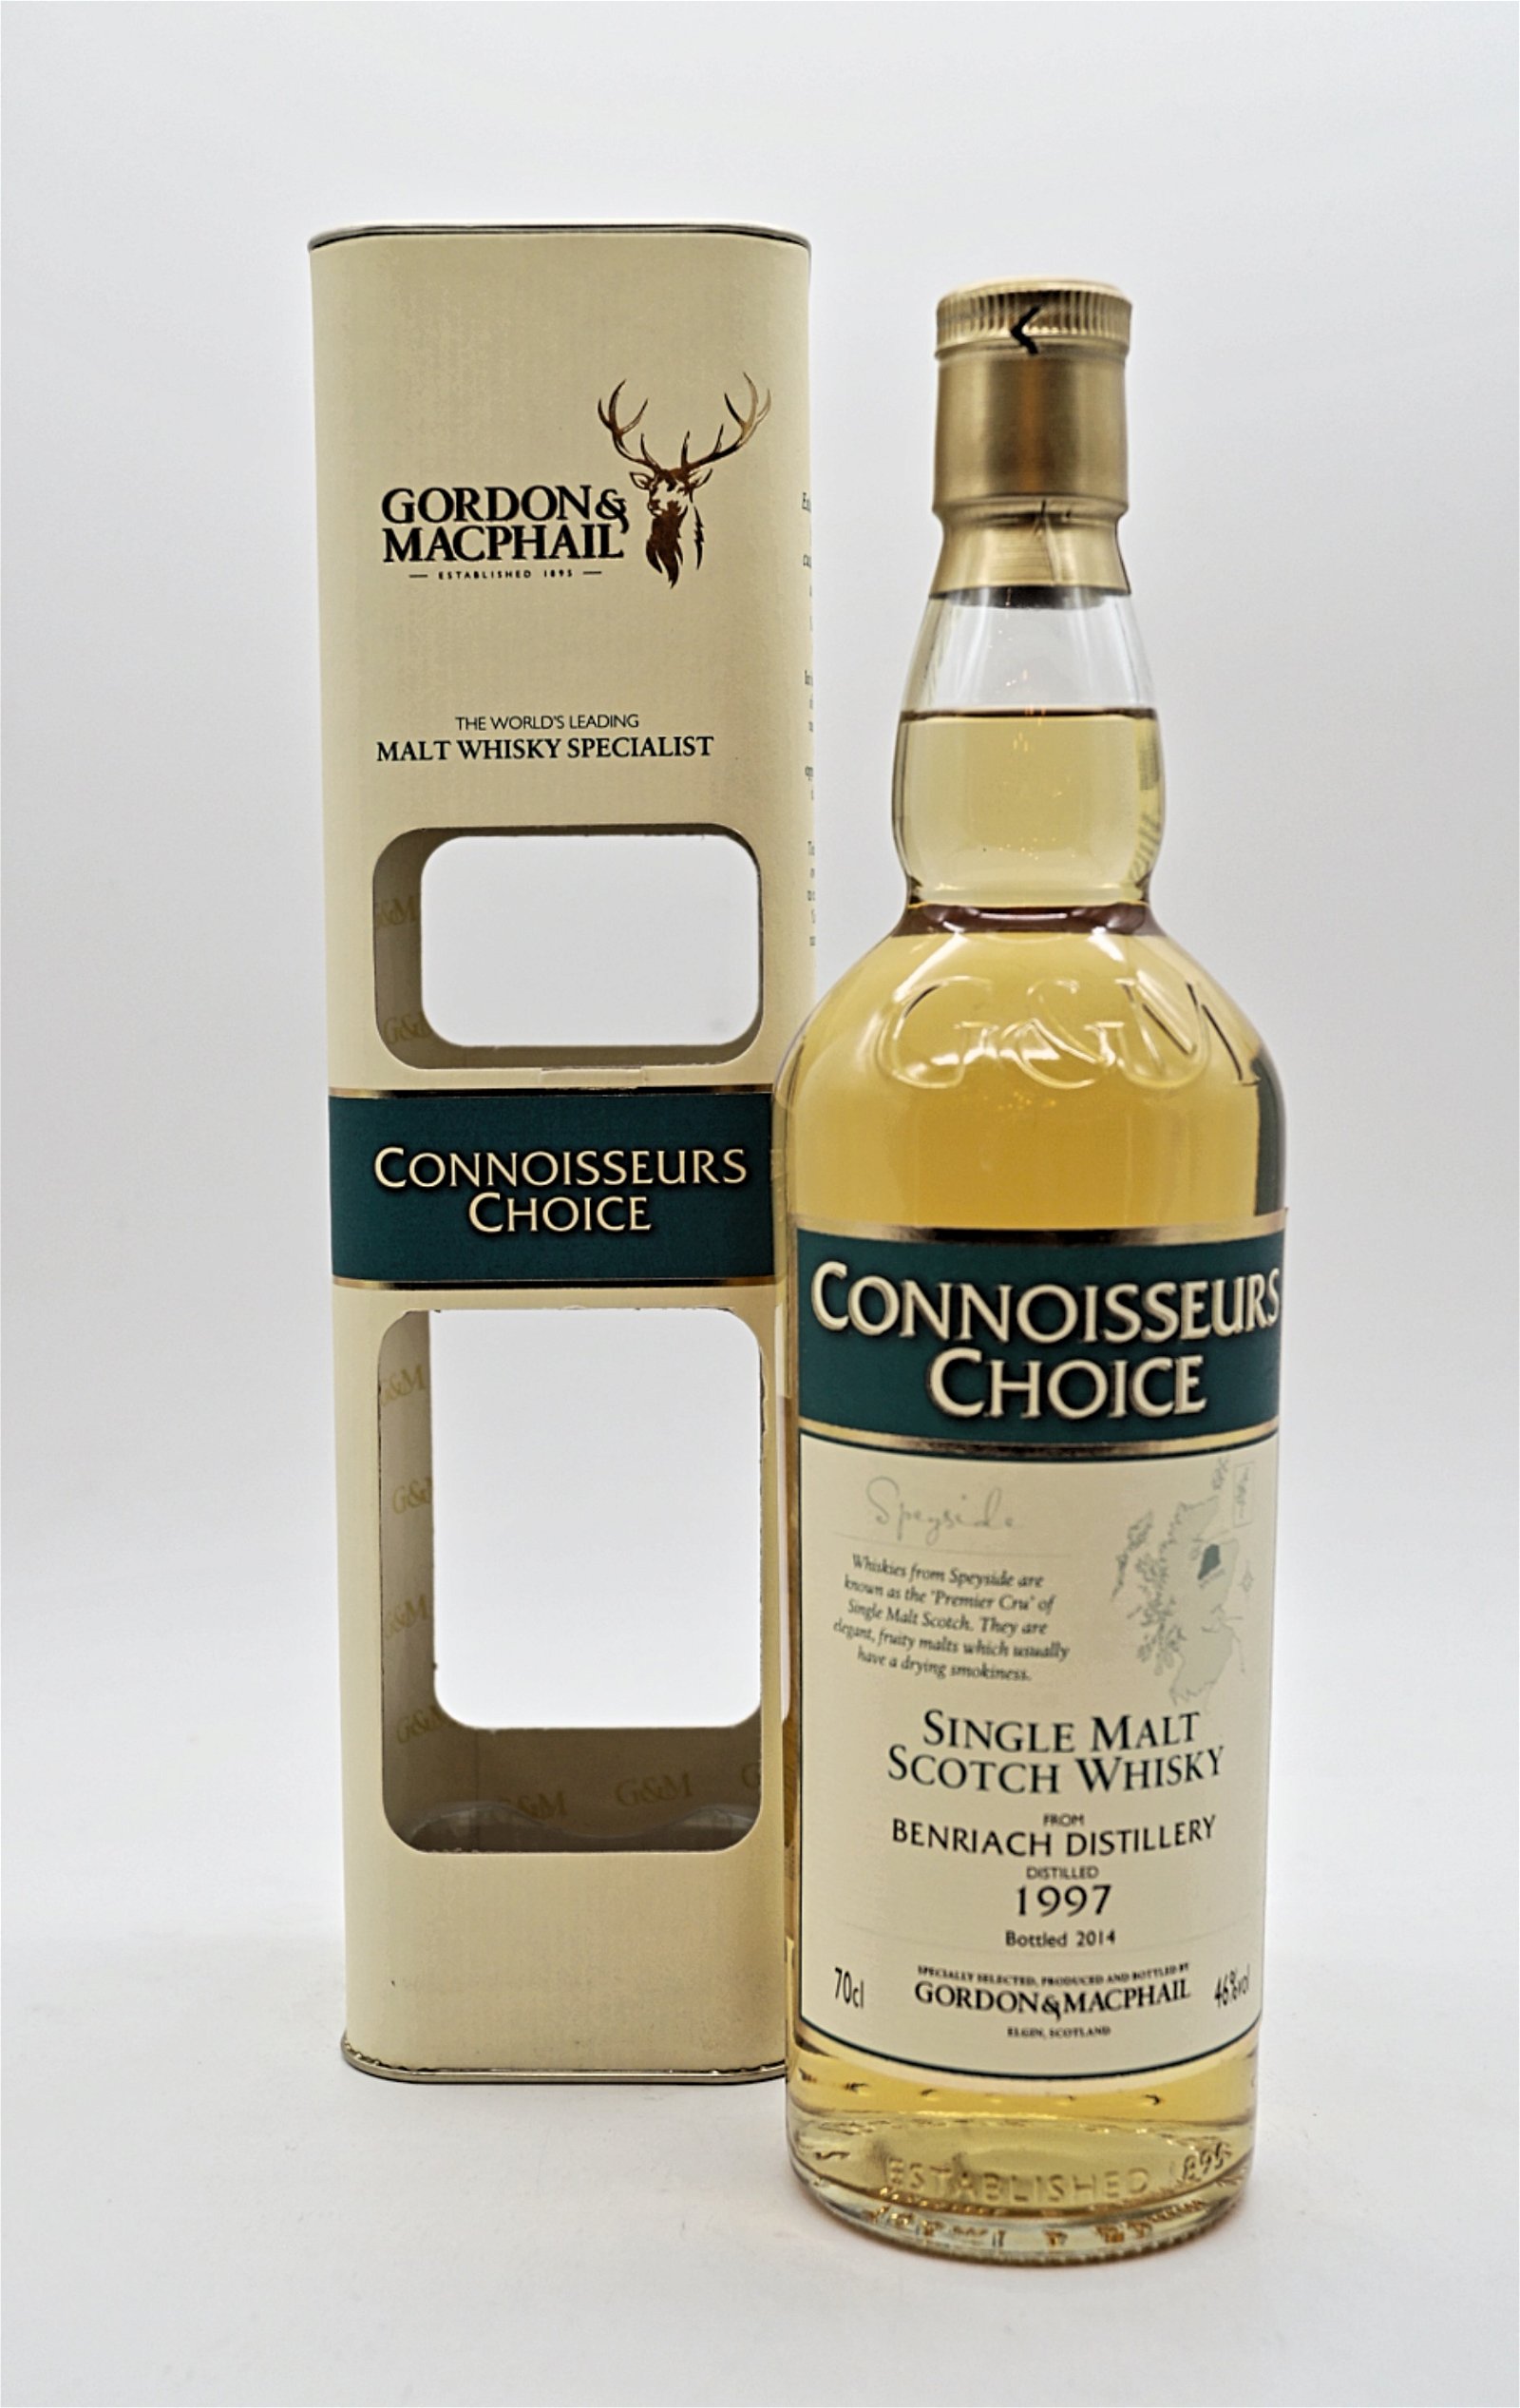 Gordon & Macphail Connoisseurs Choice Benriach 1997/2014 Single Malt Scotch Whisky